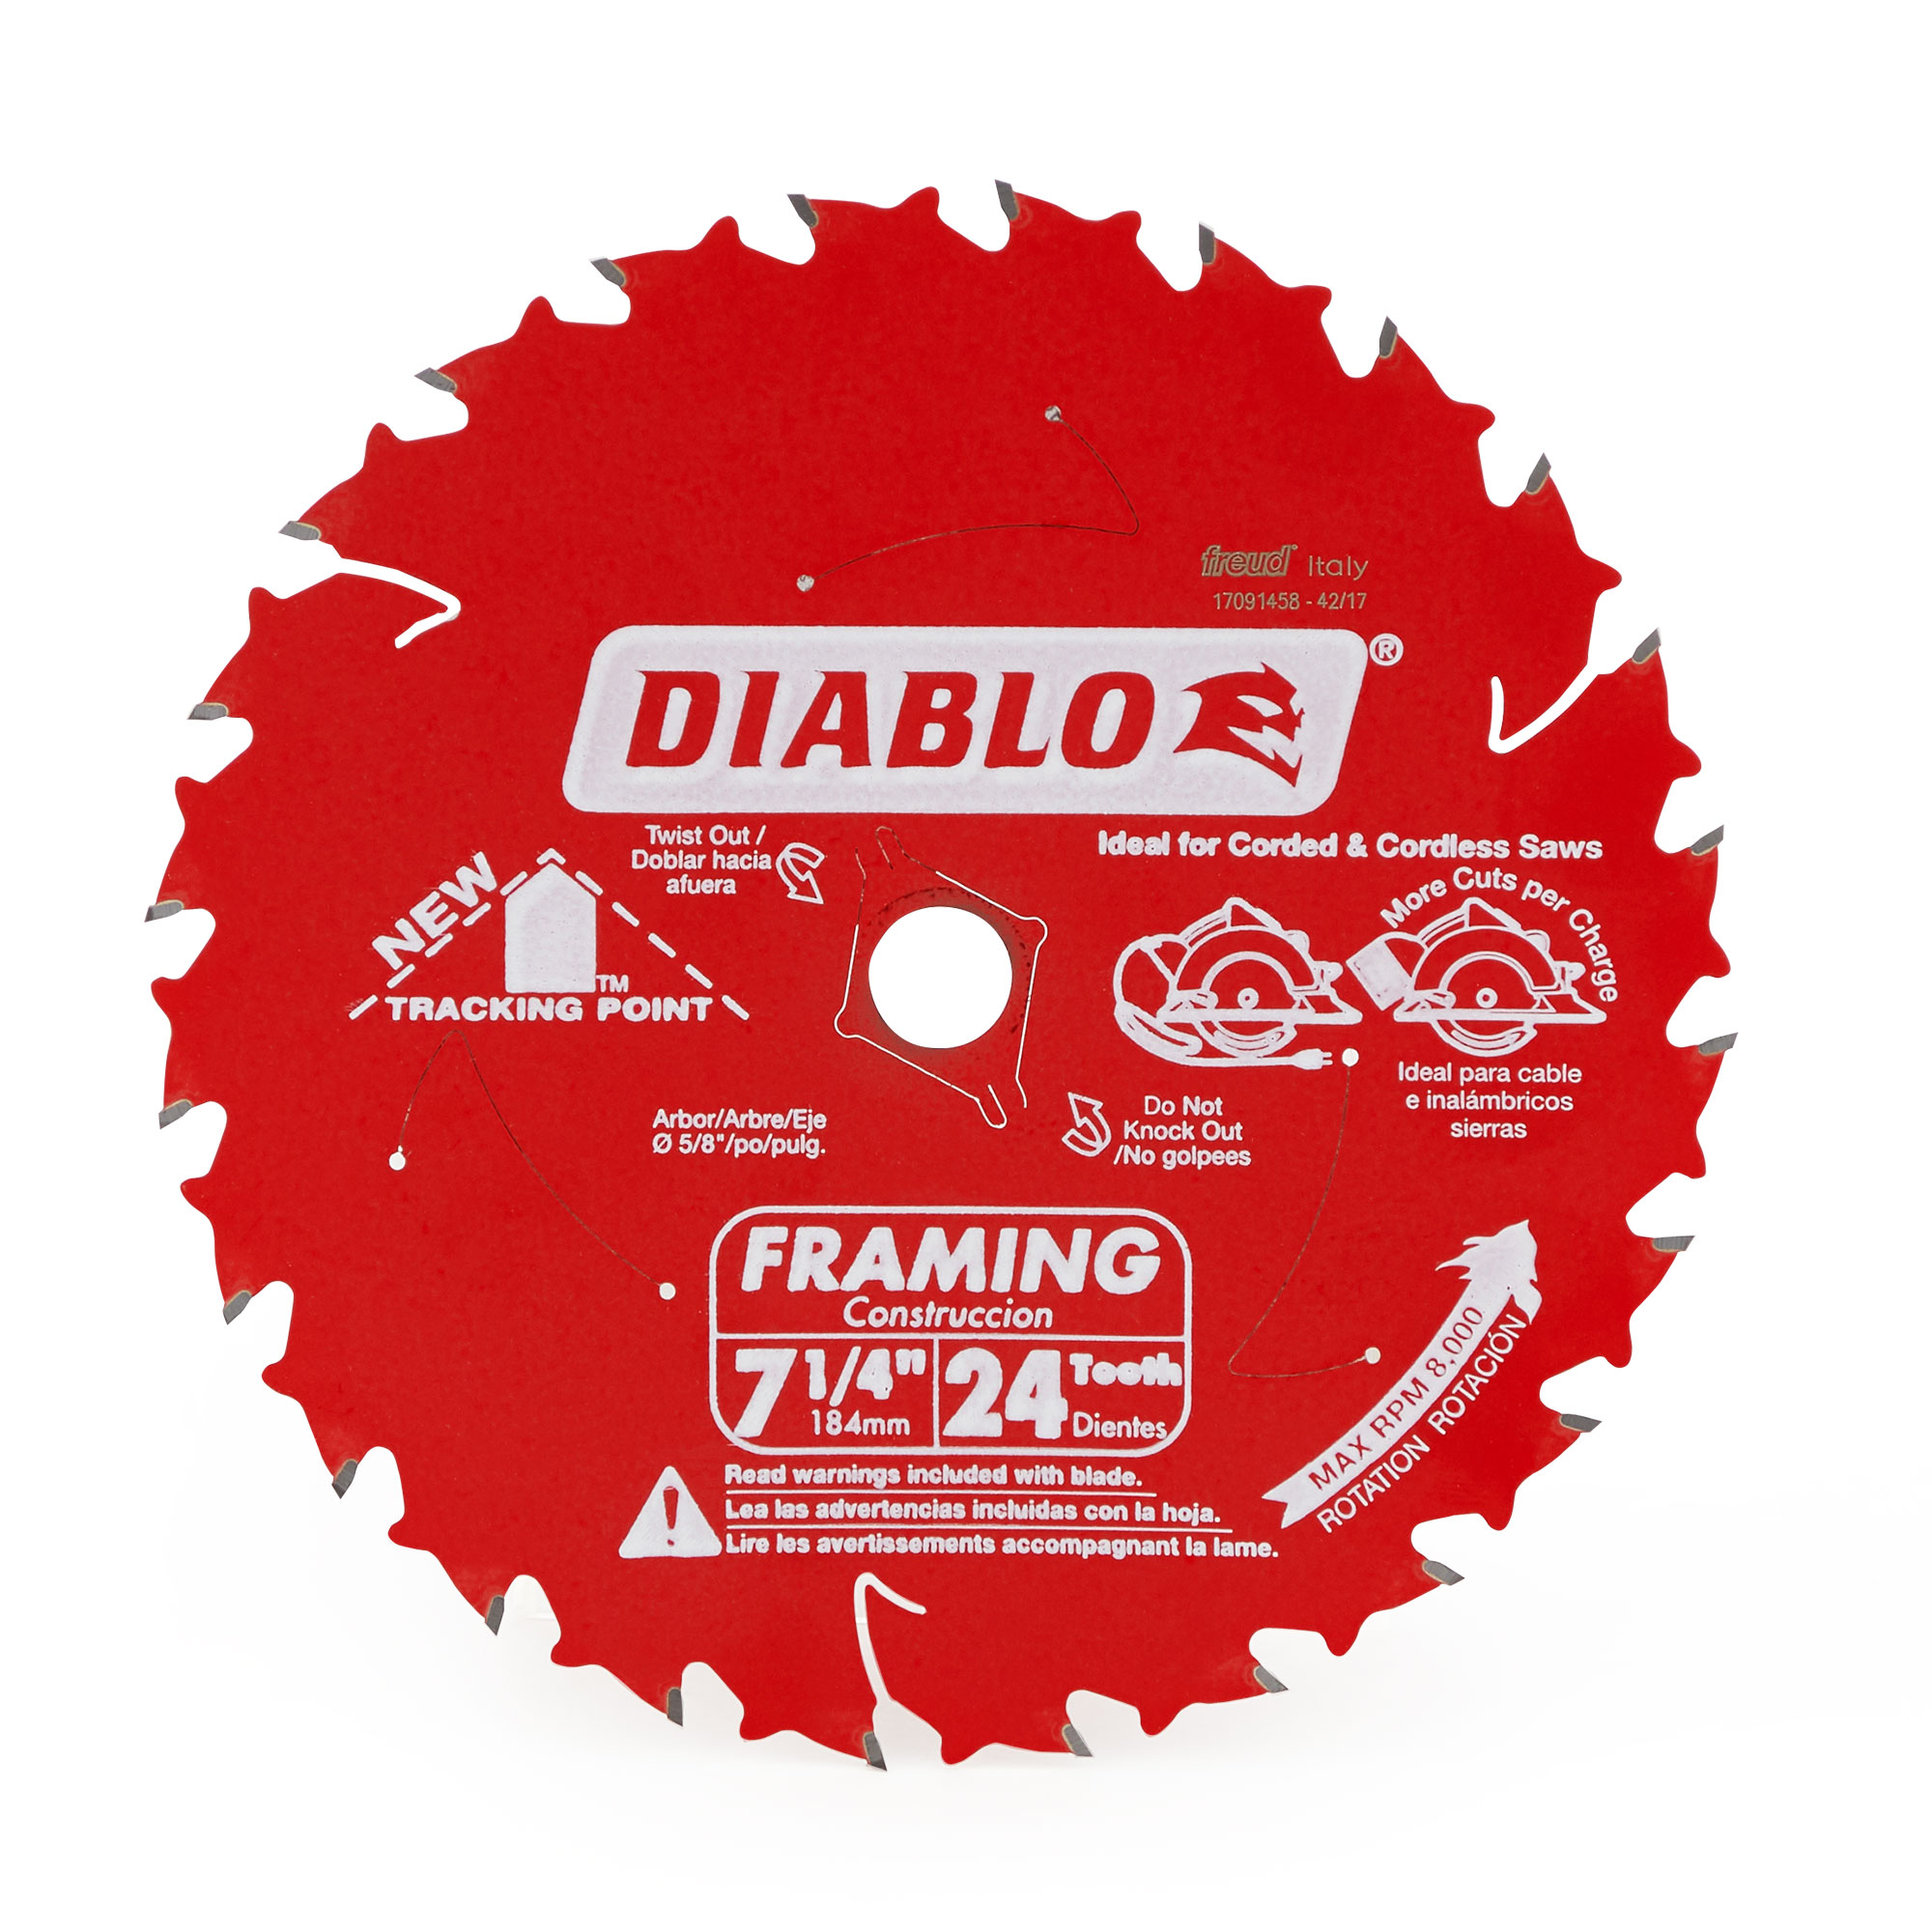 Skilsaw Diablo 7-1/4 Inch Magnesium Sidewinder Circular Saw with Diablo Blade - image 4 of 11